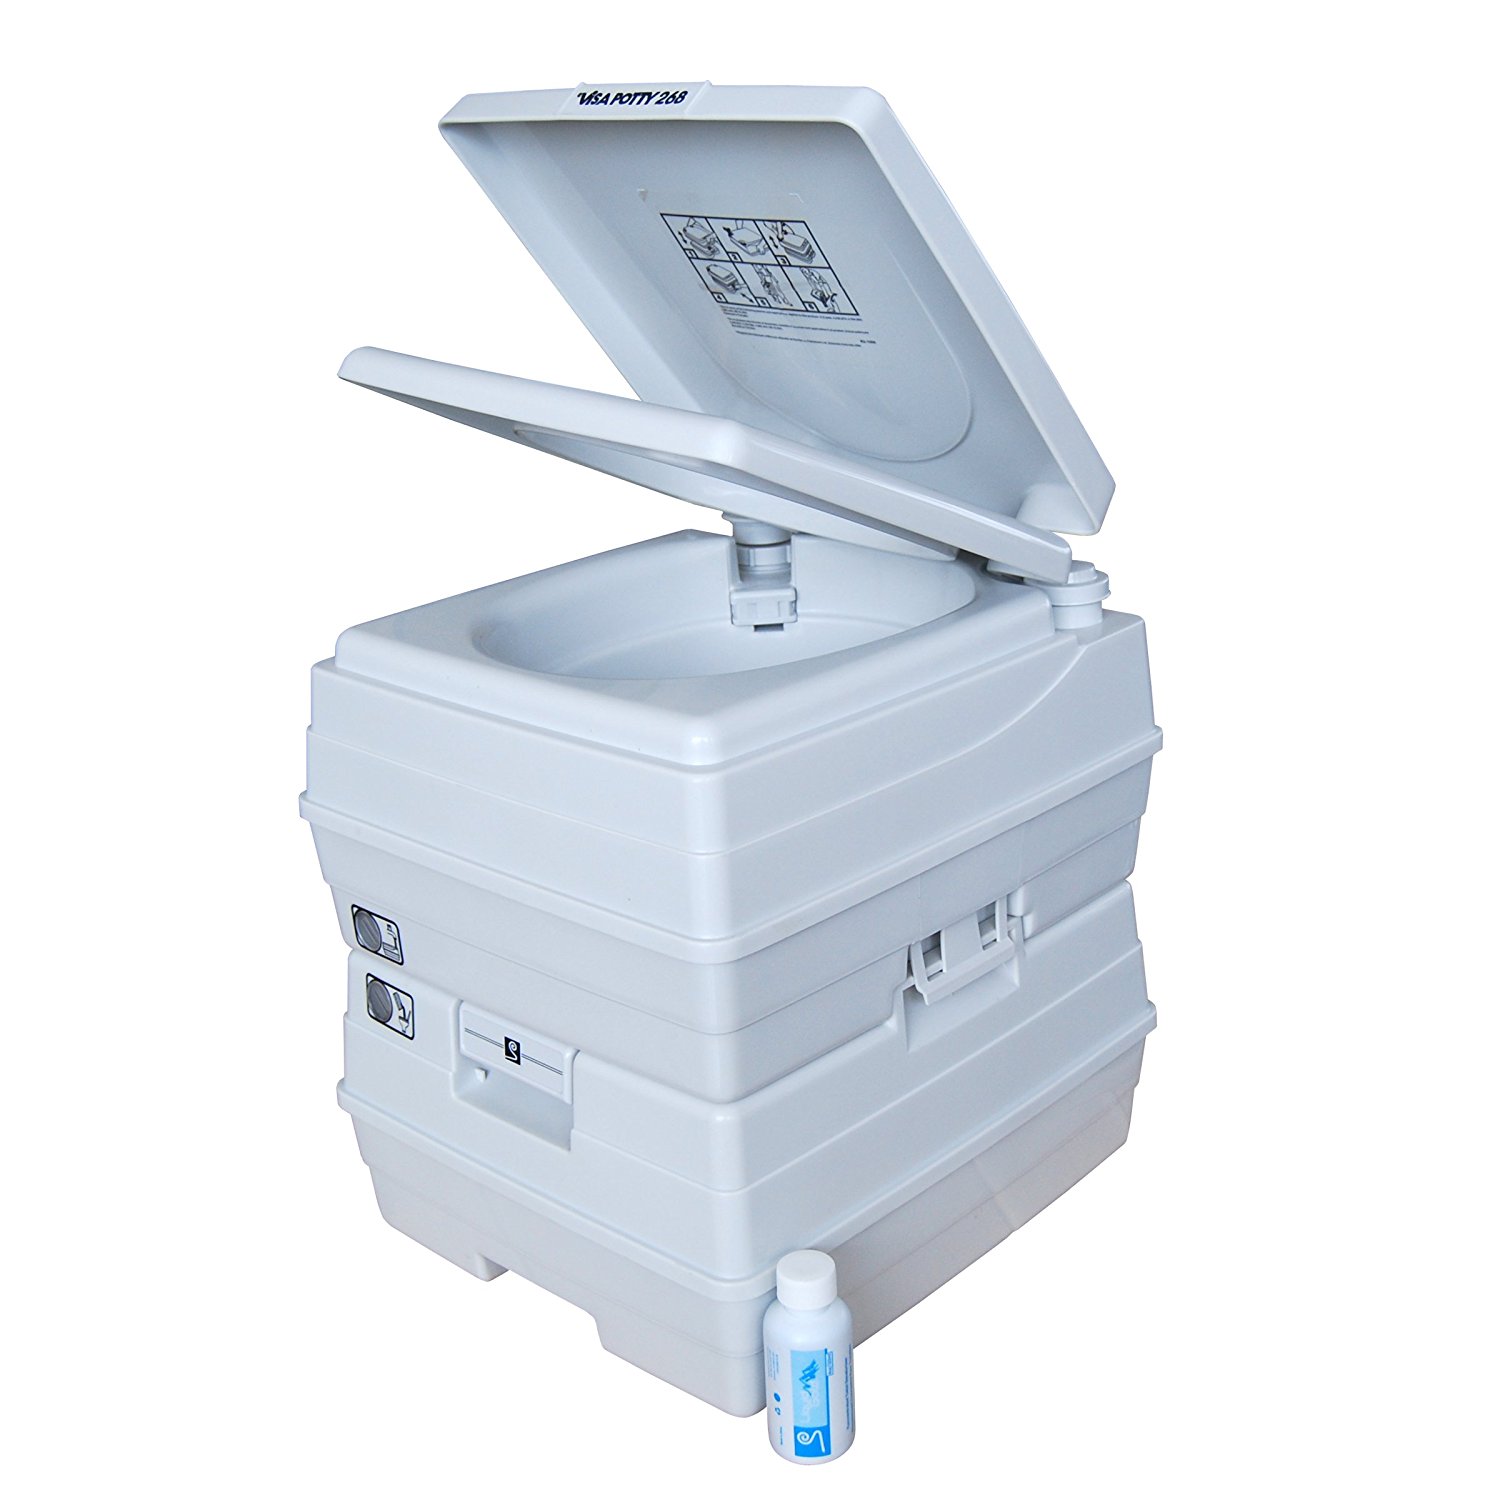 Sanitation Equipment Visa Potty Model: 268 24 Liter with 2-level Indicators